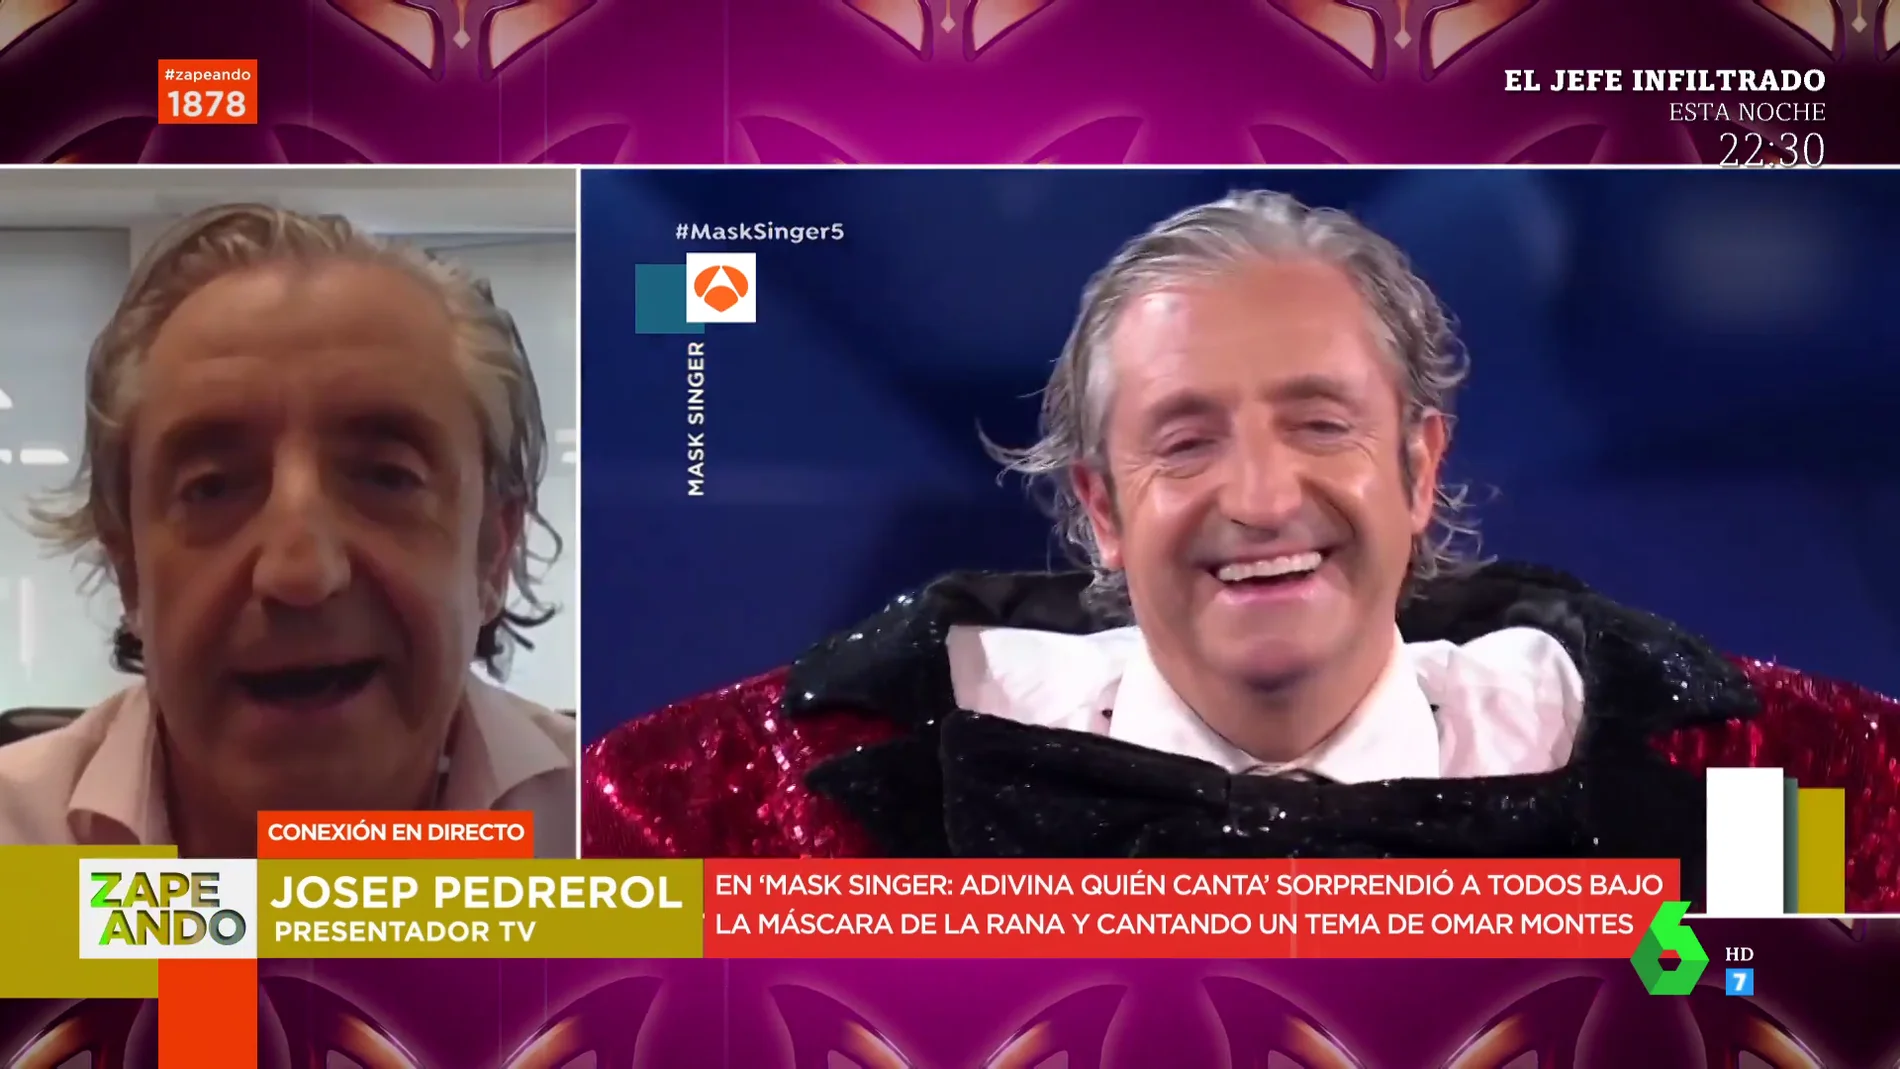 La divertida entrevista a Josep Pedrerol tras desvelar que es Rana en Mask Singer: "La Spice me quitó protagonismo"